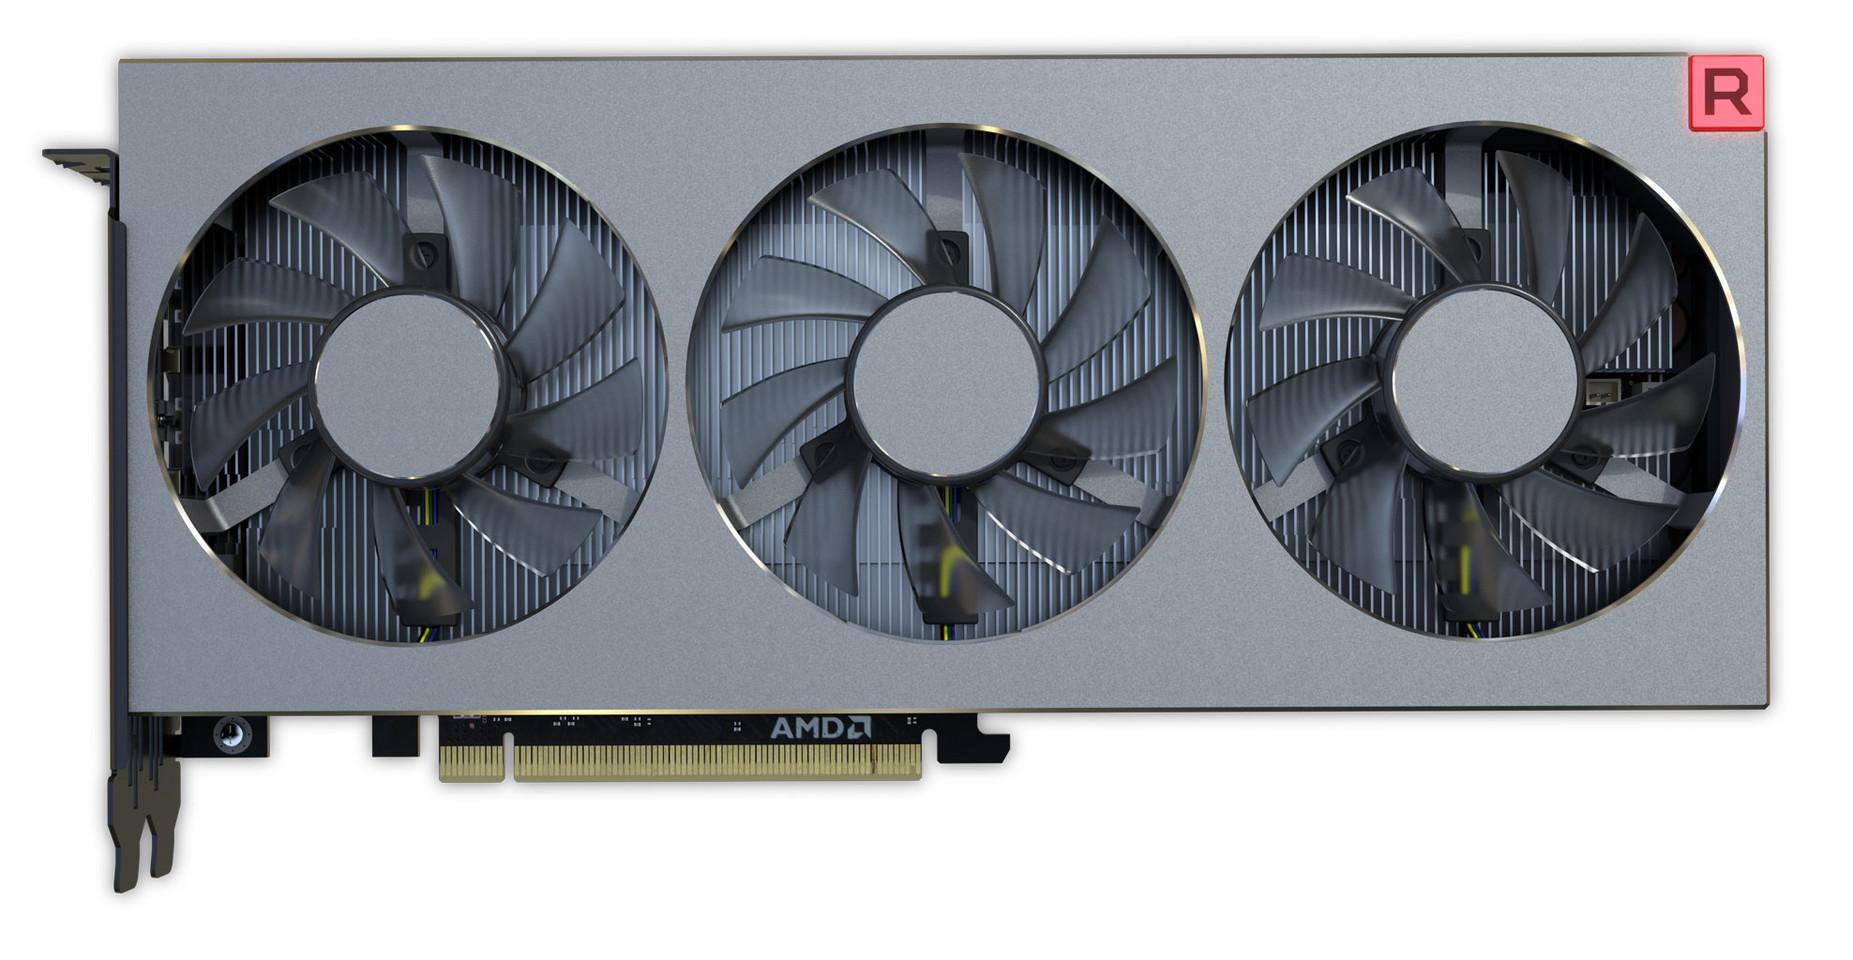 More information about "H AMD τερματίζει την παραγωγή Radeon VII"